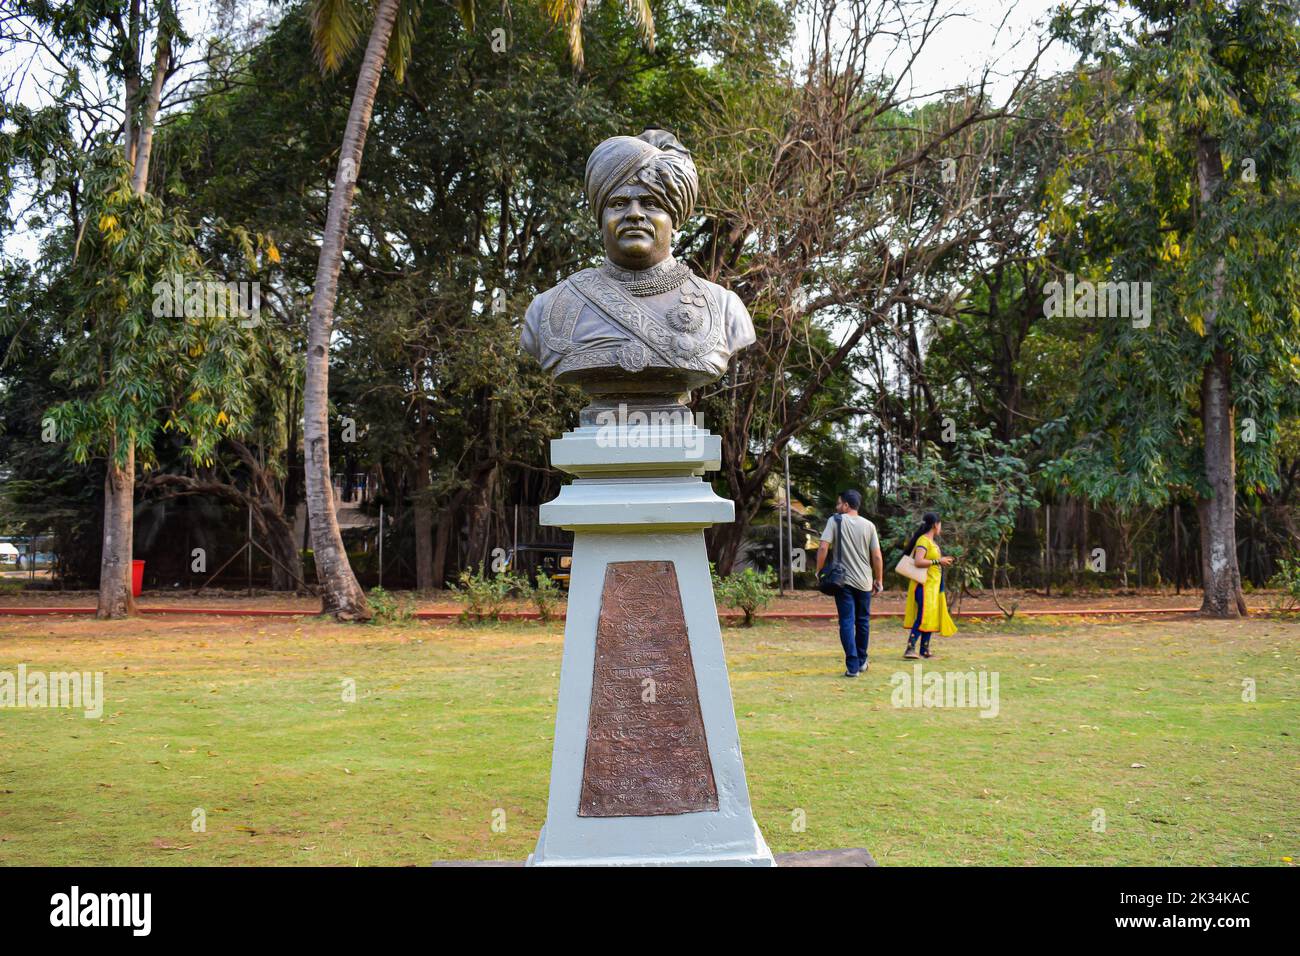 A statue of great Indian Maratha king Rajashri Shri Shahu Maharaj in the park with tourists Stock Photo